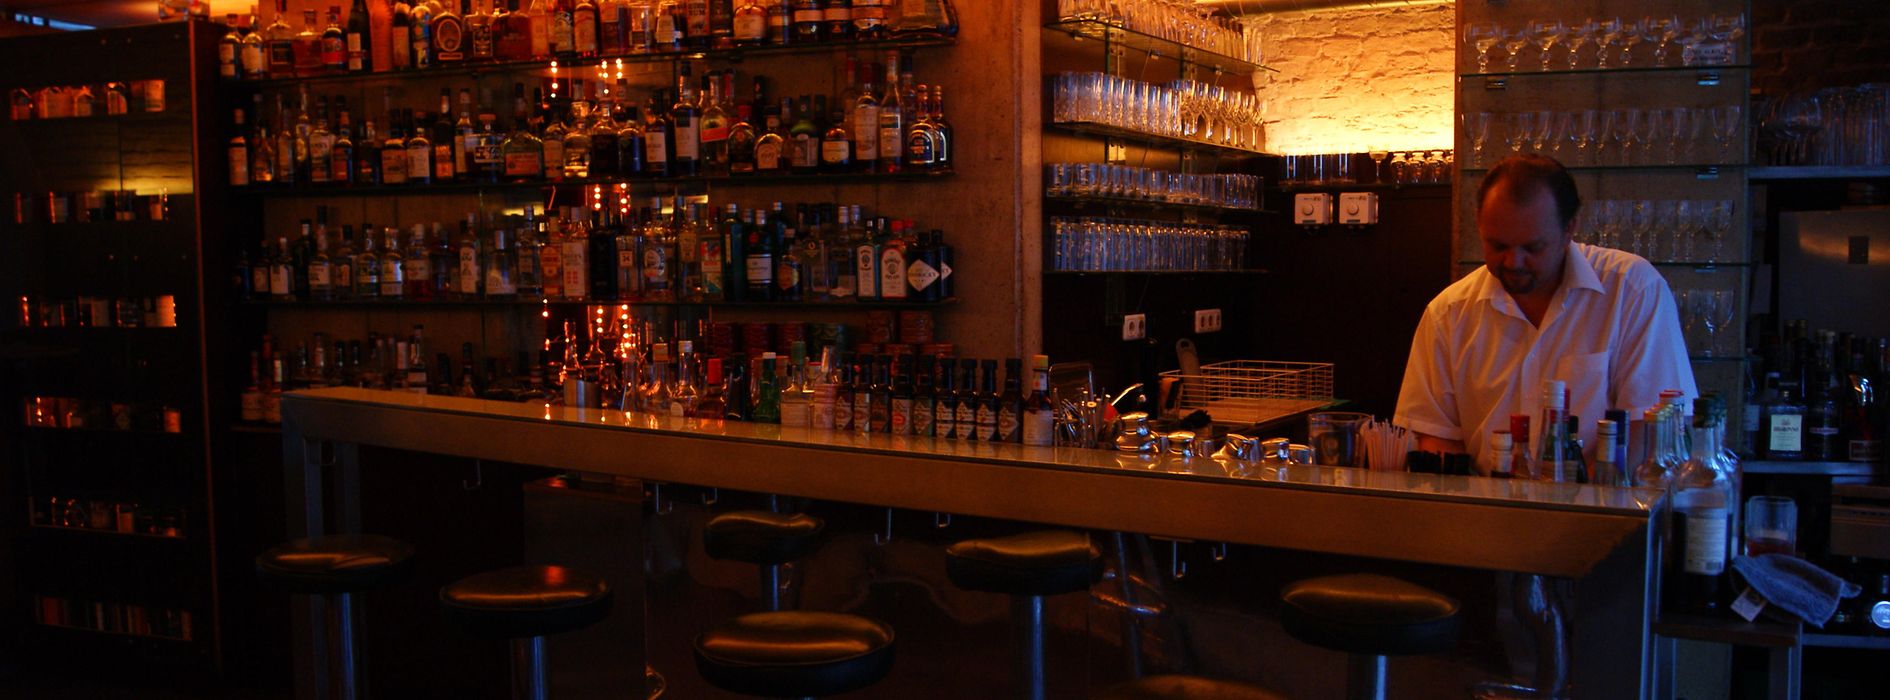 Halbestadt Bar